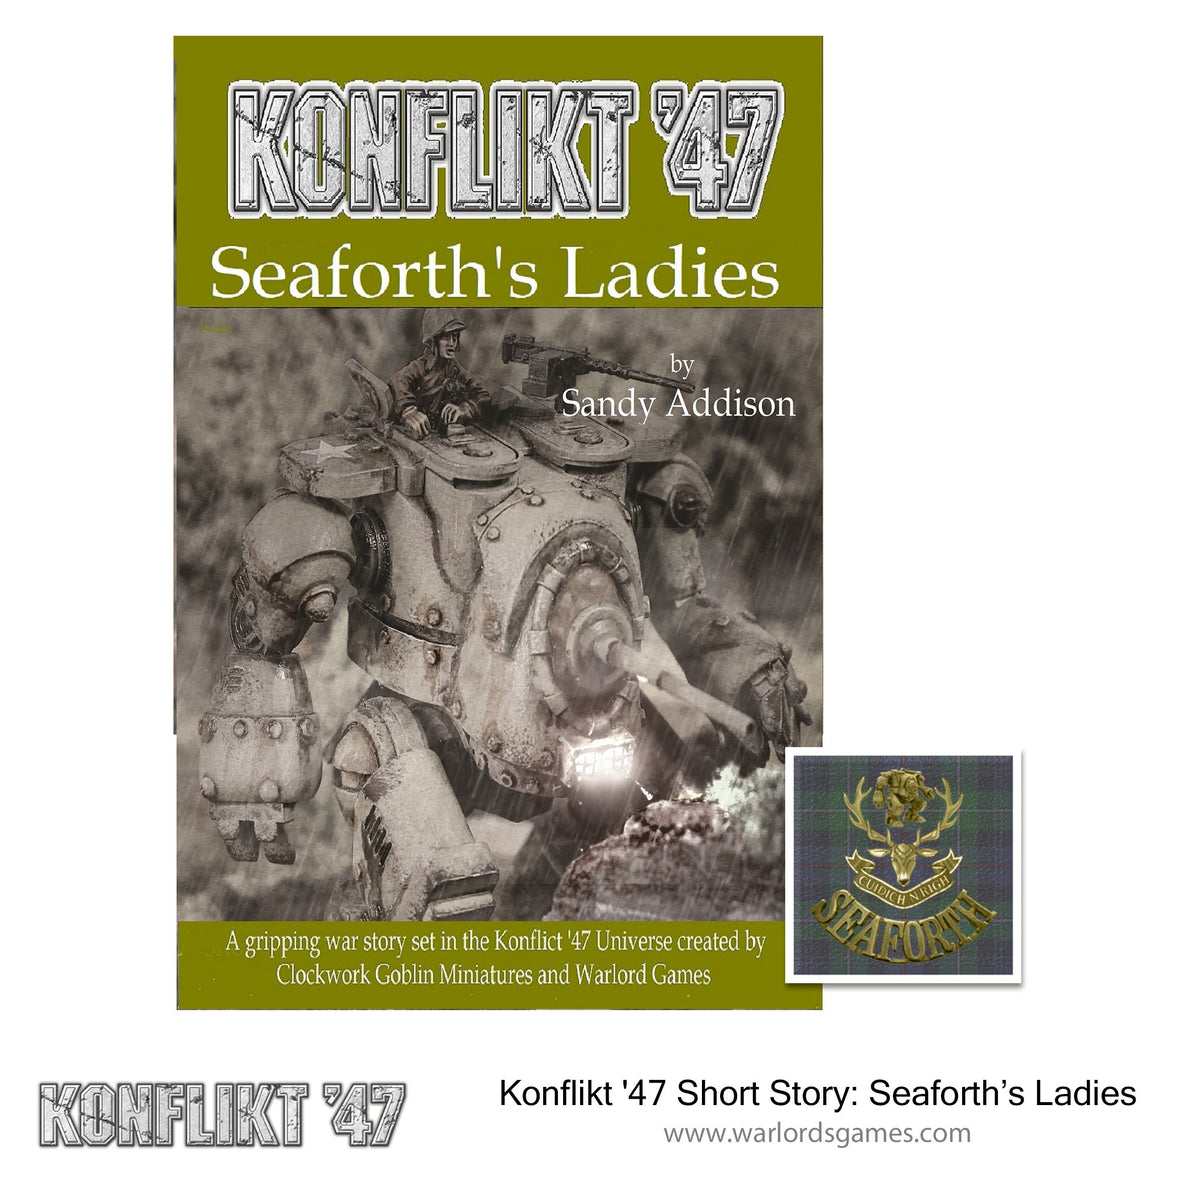 Konflikt '47 Short Story: Seaforth’s Ladies